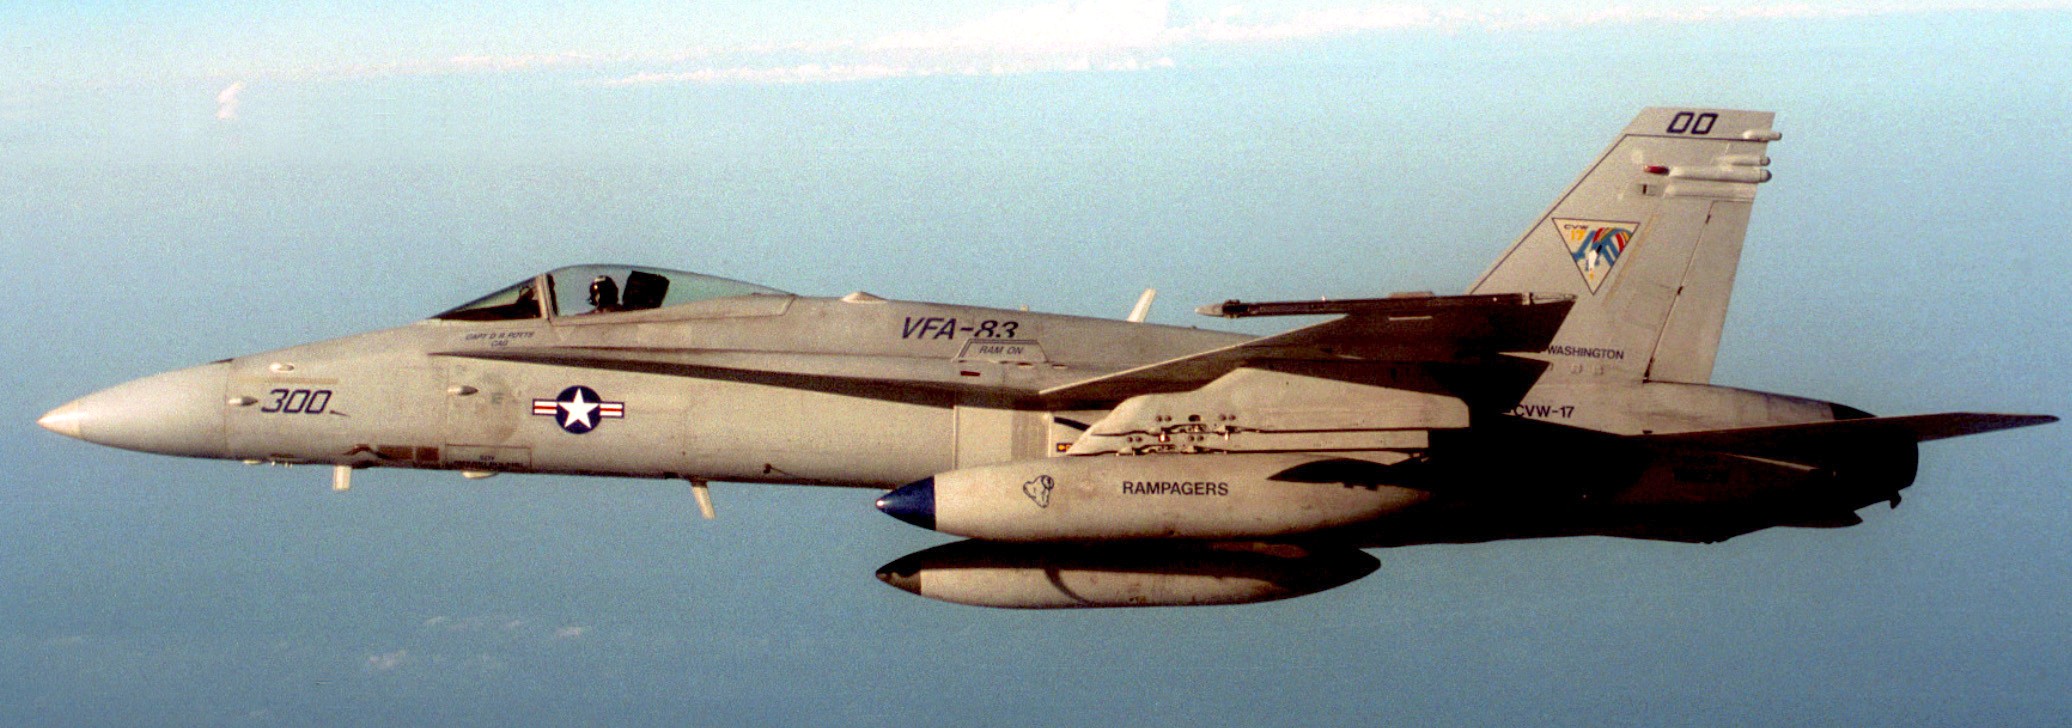 vfa-83 rampagers strike fighter squadron f/a-18c hornet cvw-17 uss george washington cvn-73 134p